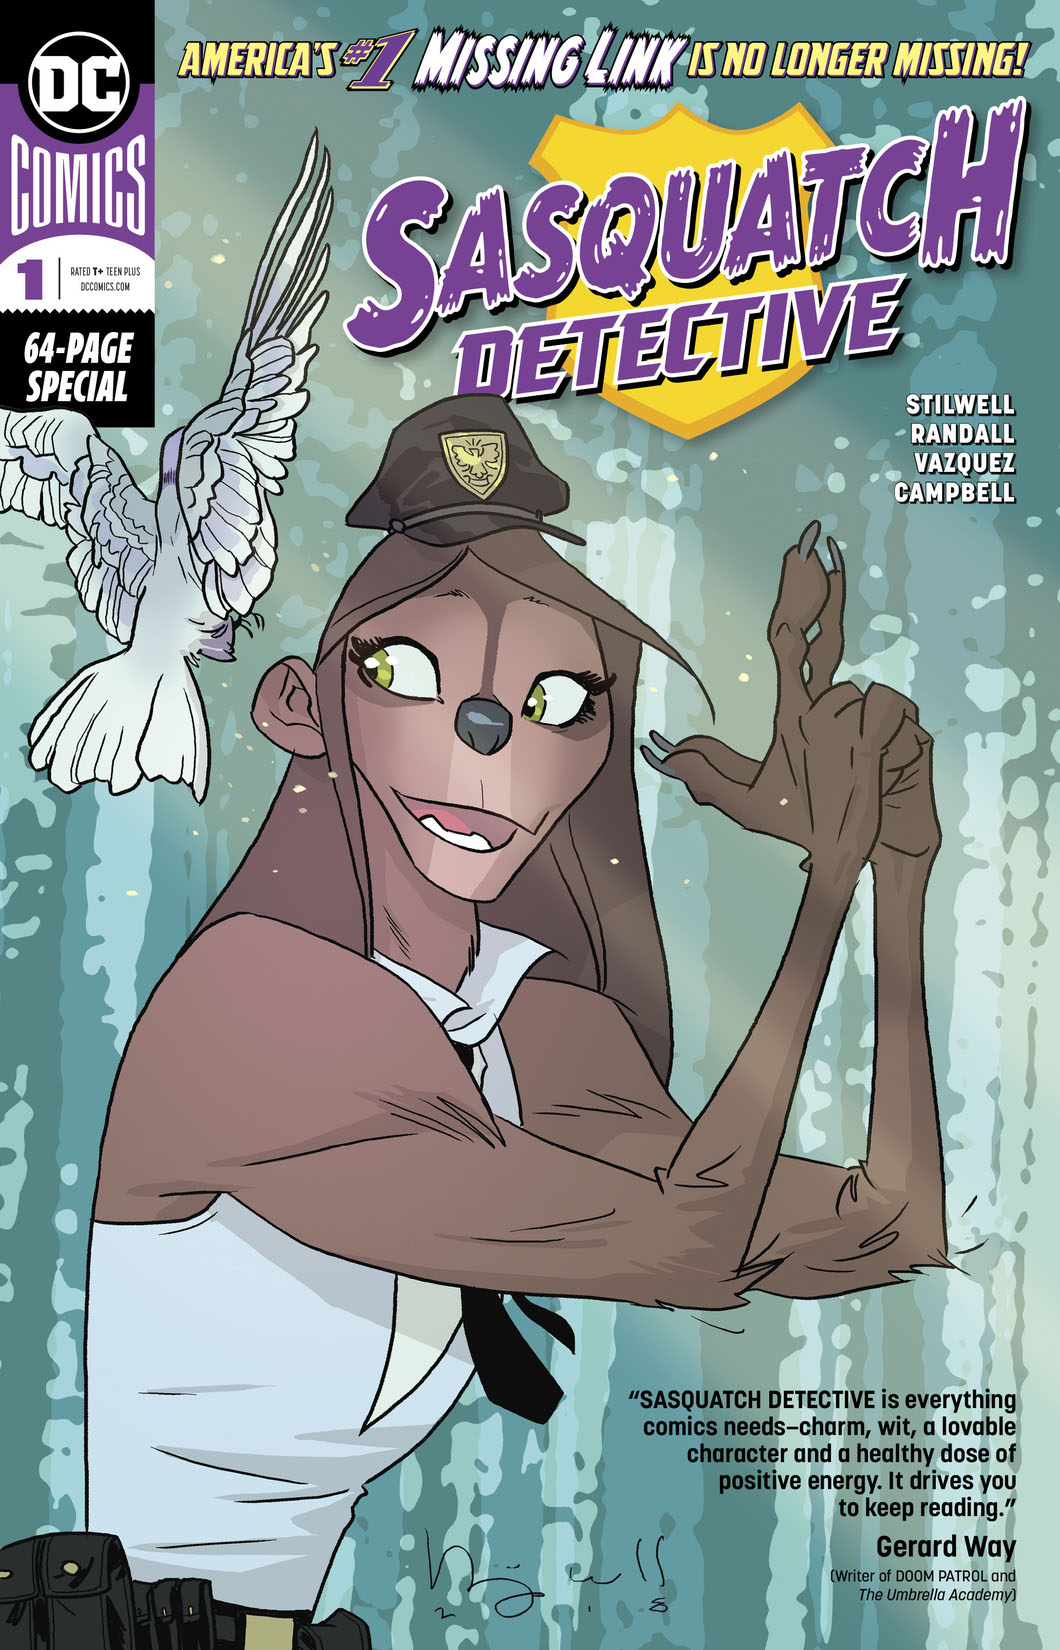 Sasquatch Detective Special #1 preview images